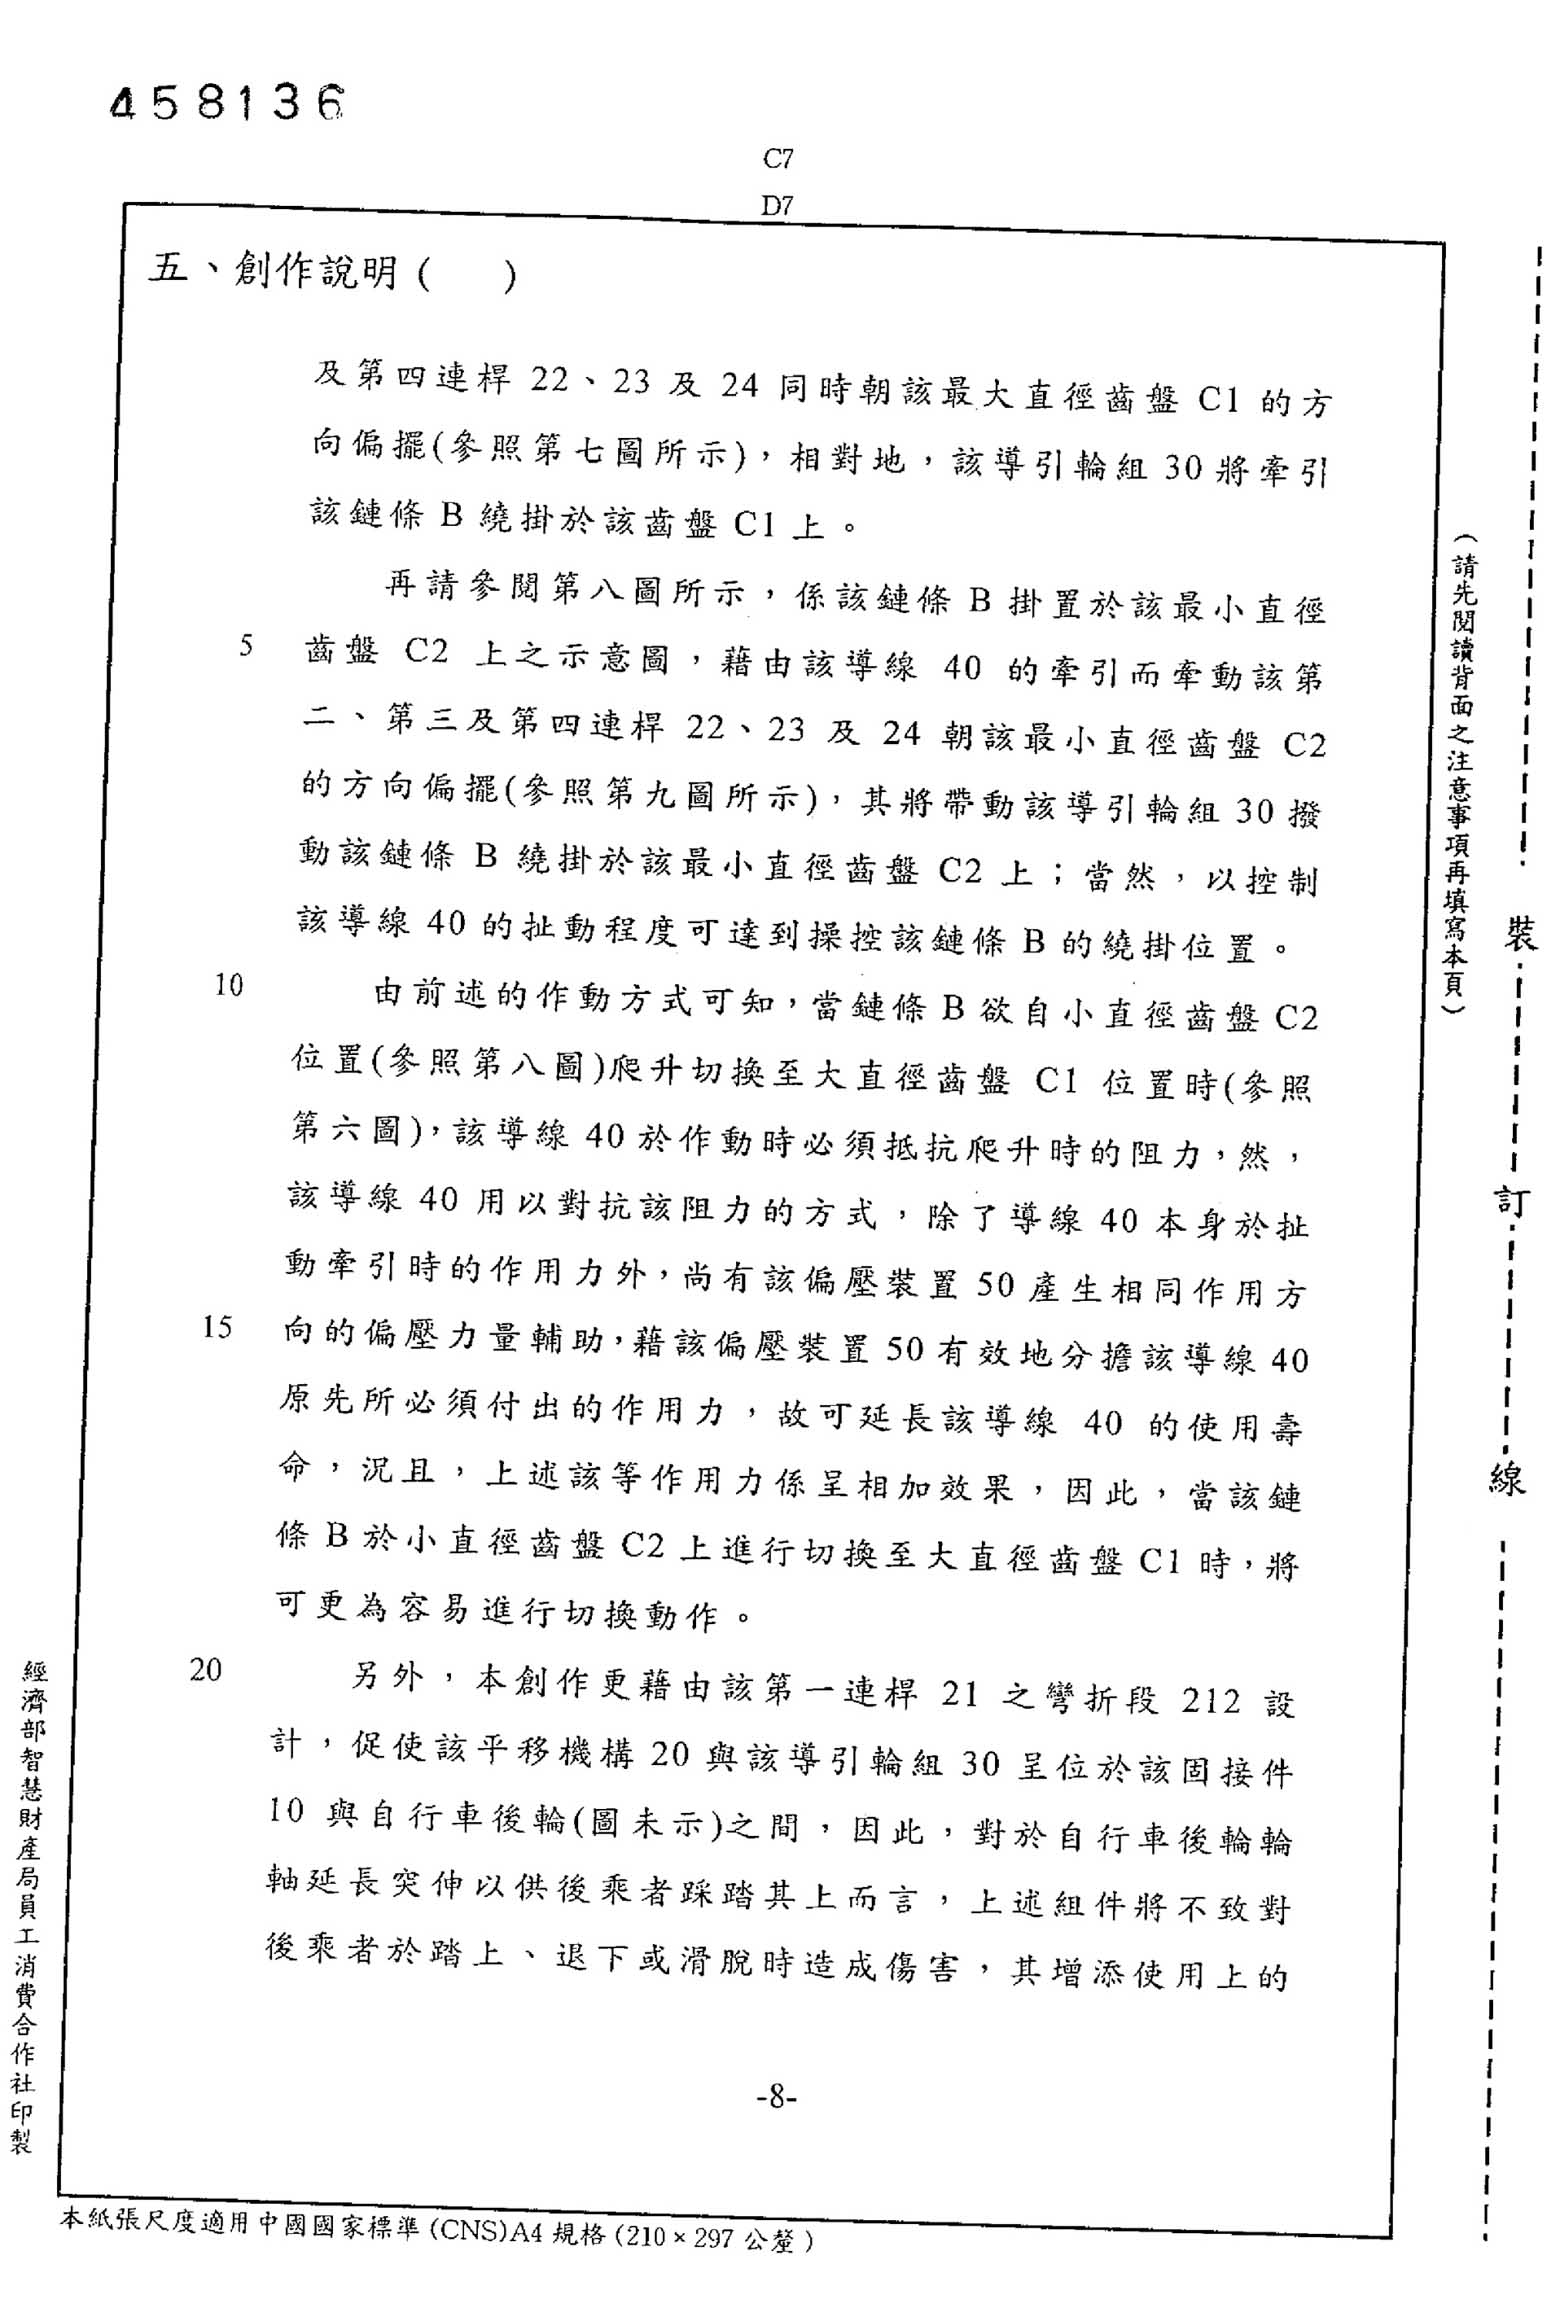 Taiwan patent 458,136 - Falcon scan 8 main image